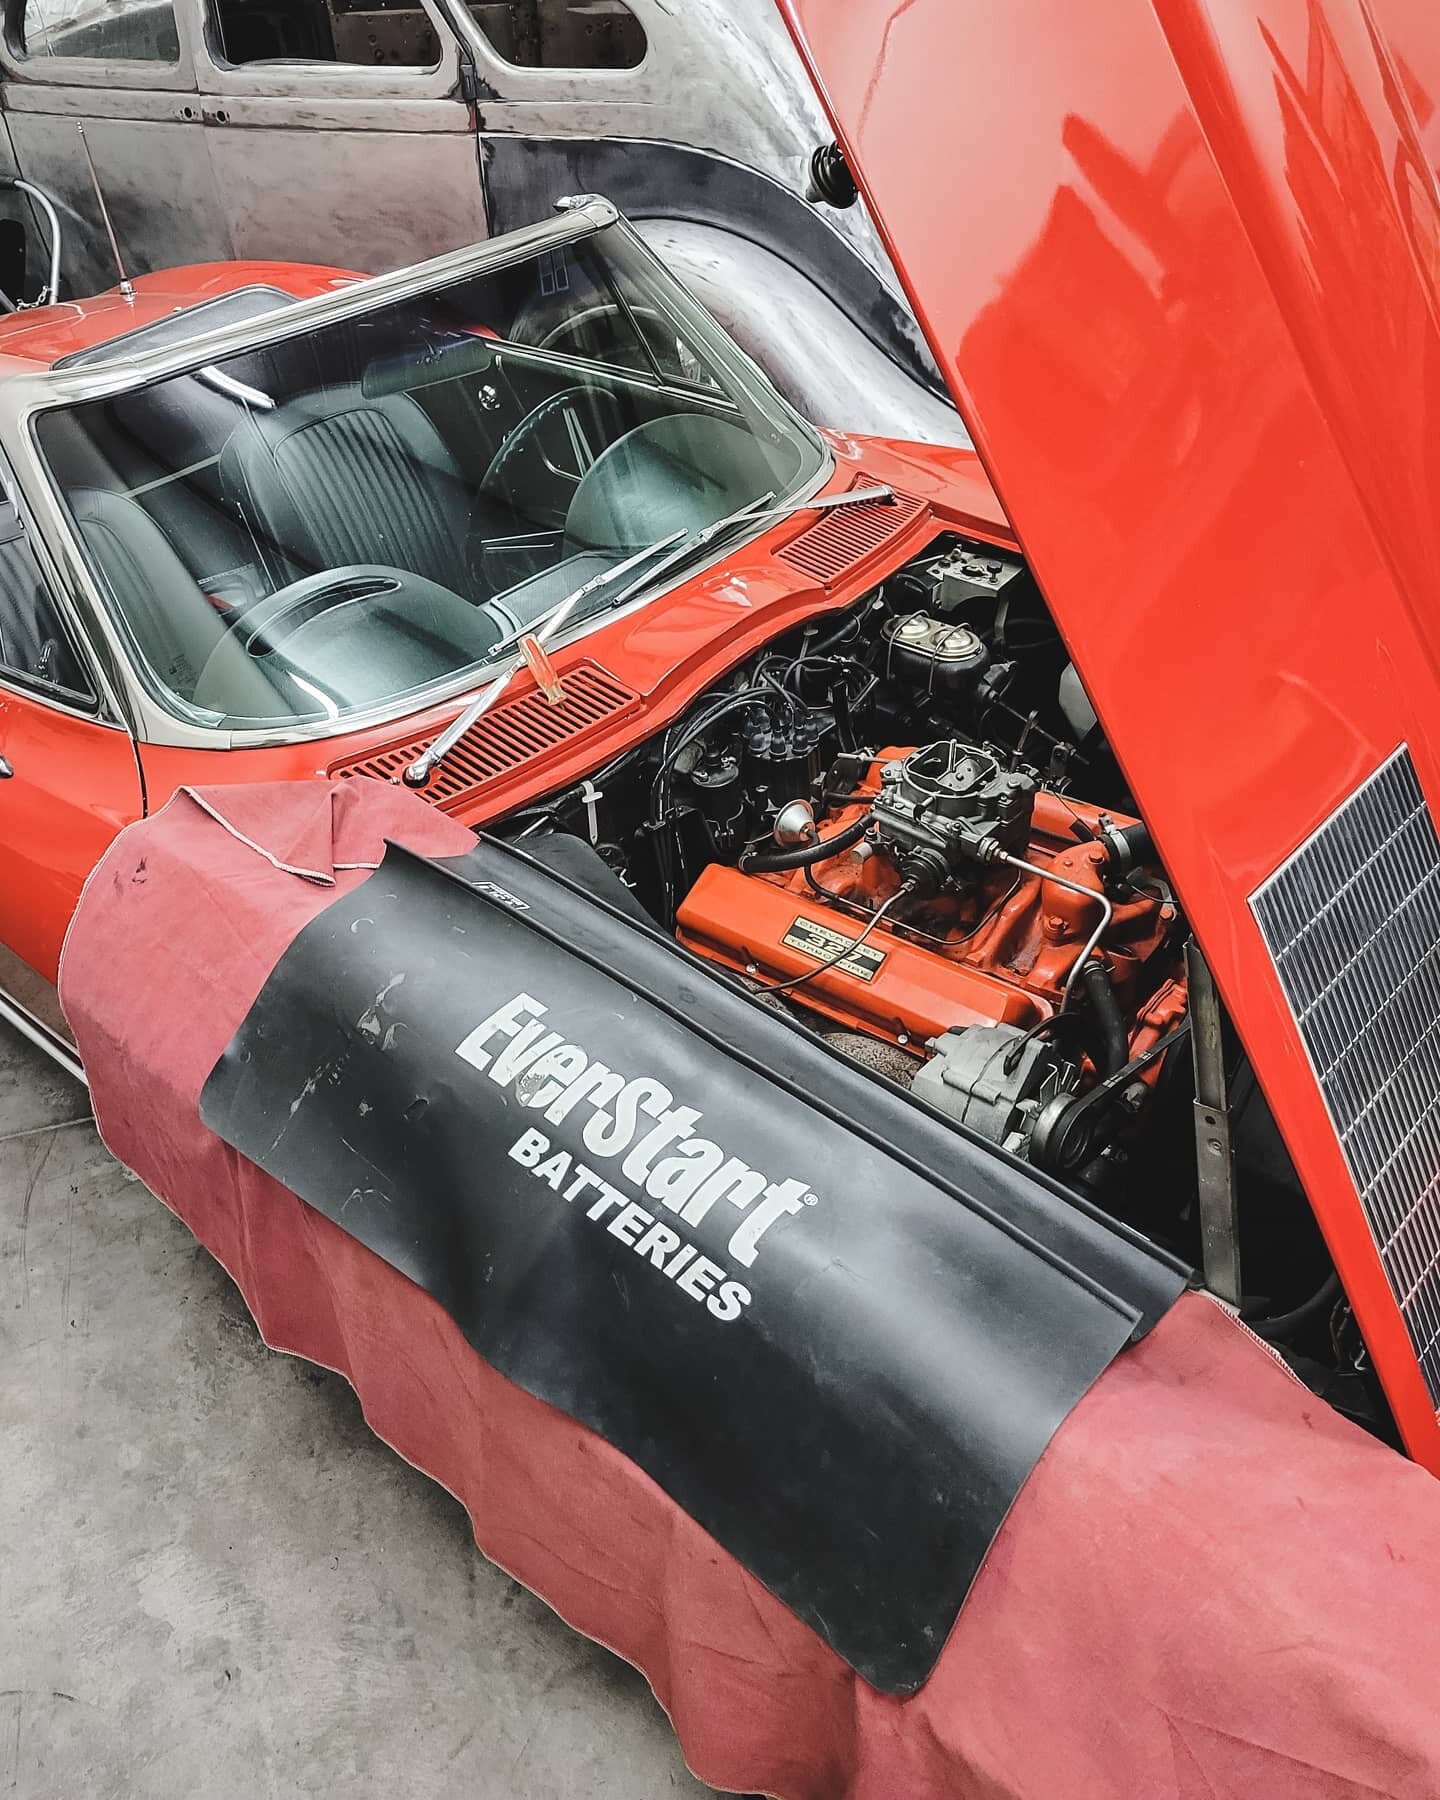 #motormonday with this numbers matching #63corvette featuring a 327ci V8 under the hood.
.
.
.
.
#classicvette #vetteporn #classiccorvette #enginebay #engineporn #horsepower #c2corvette #chevroletcorvette #hotrodshop #corvettestingray #littleredcorve